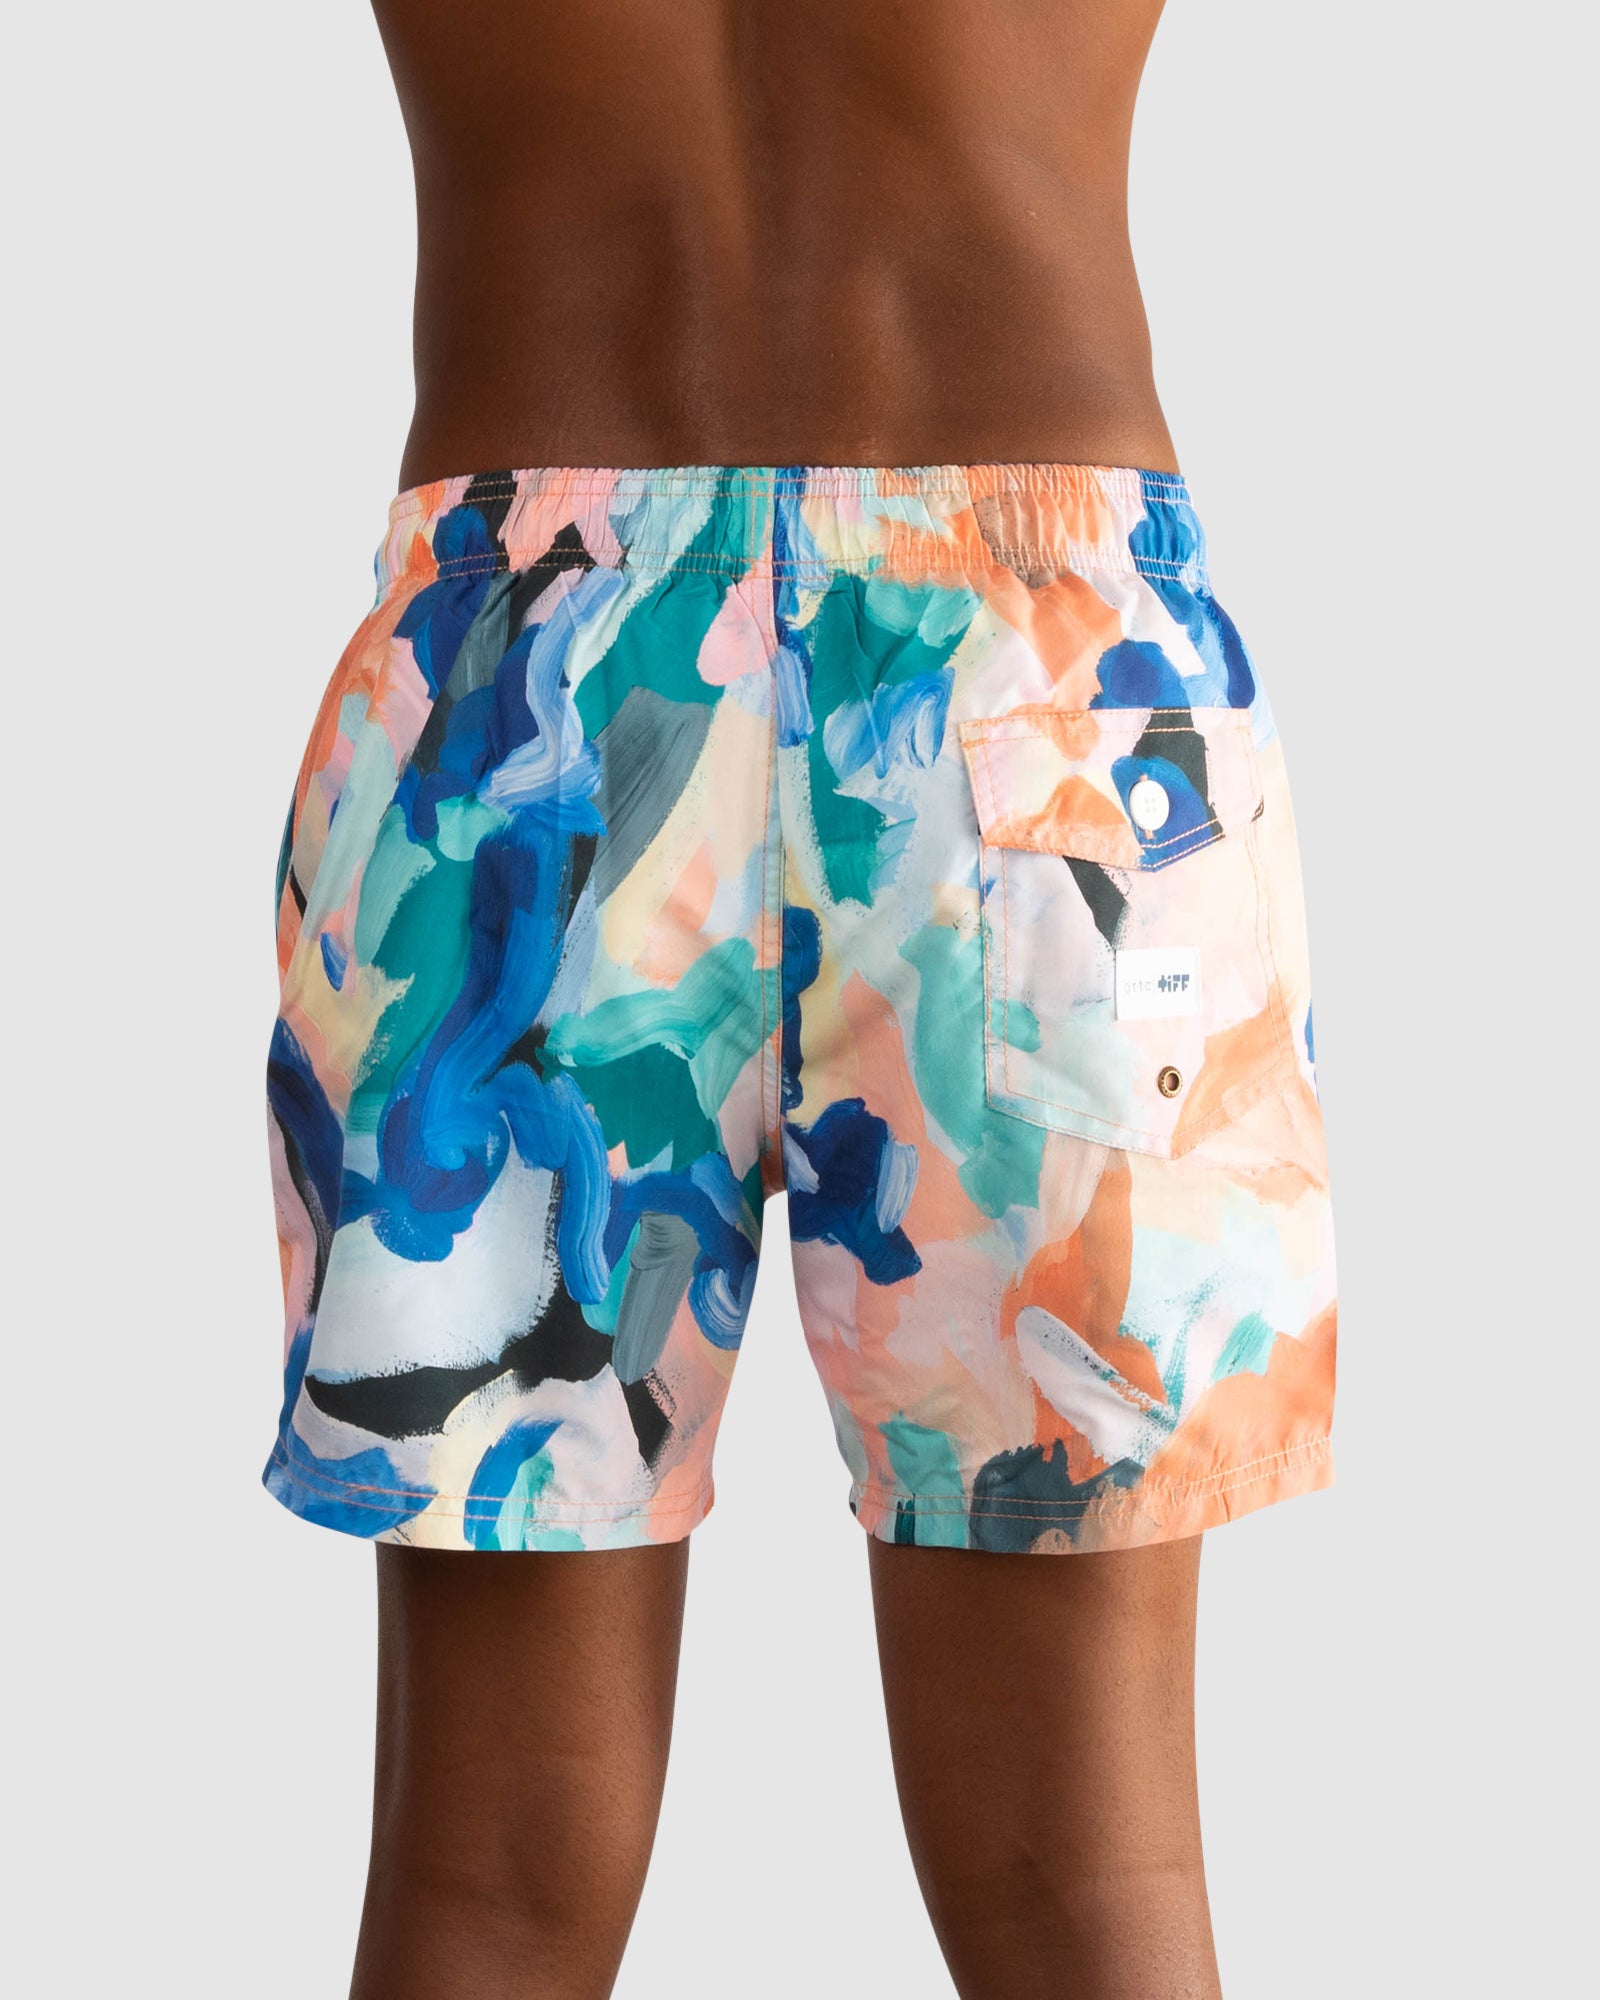 Golden Tides Swim Shorts | ortc Clothing Co - Tiff Manuell